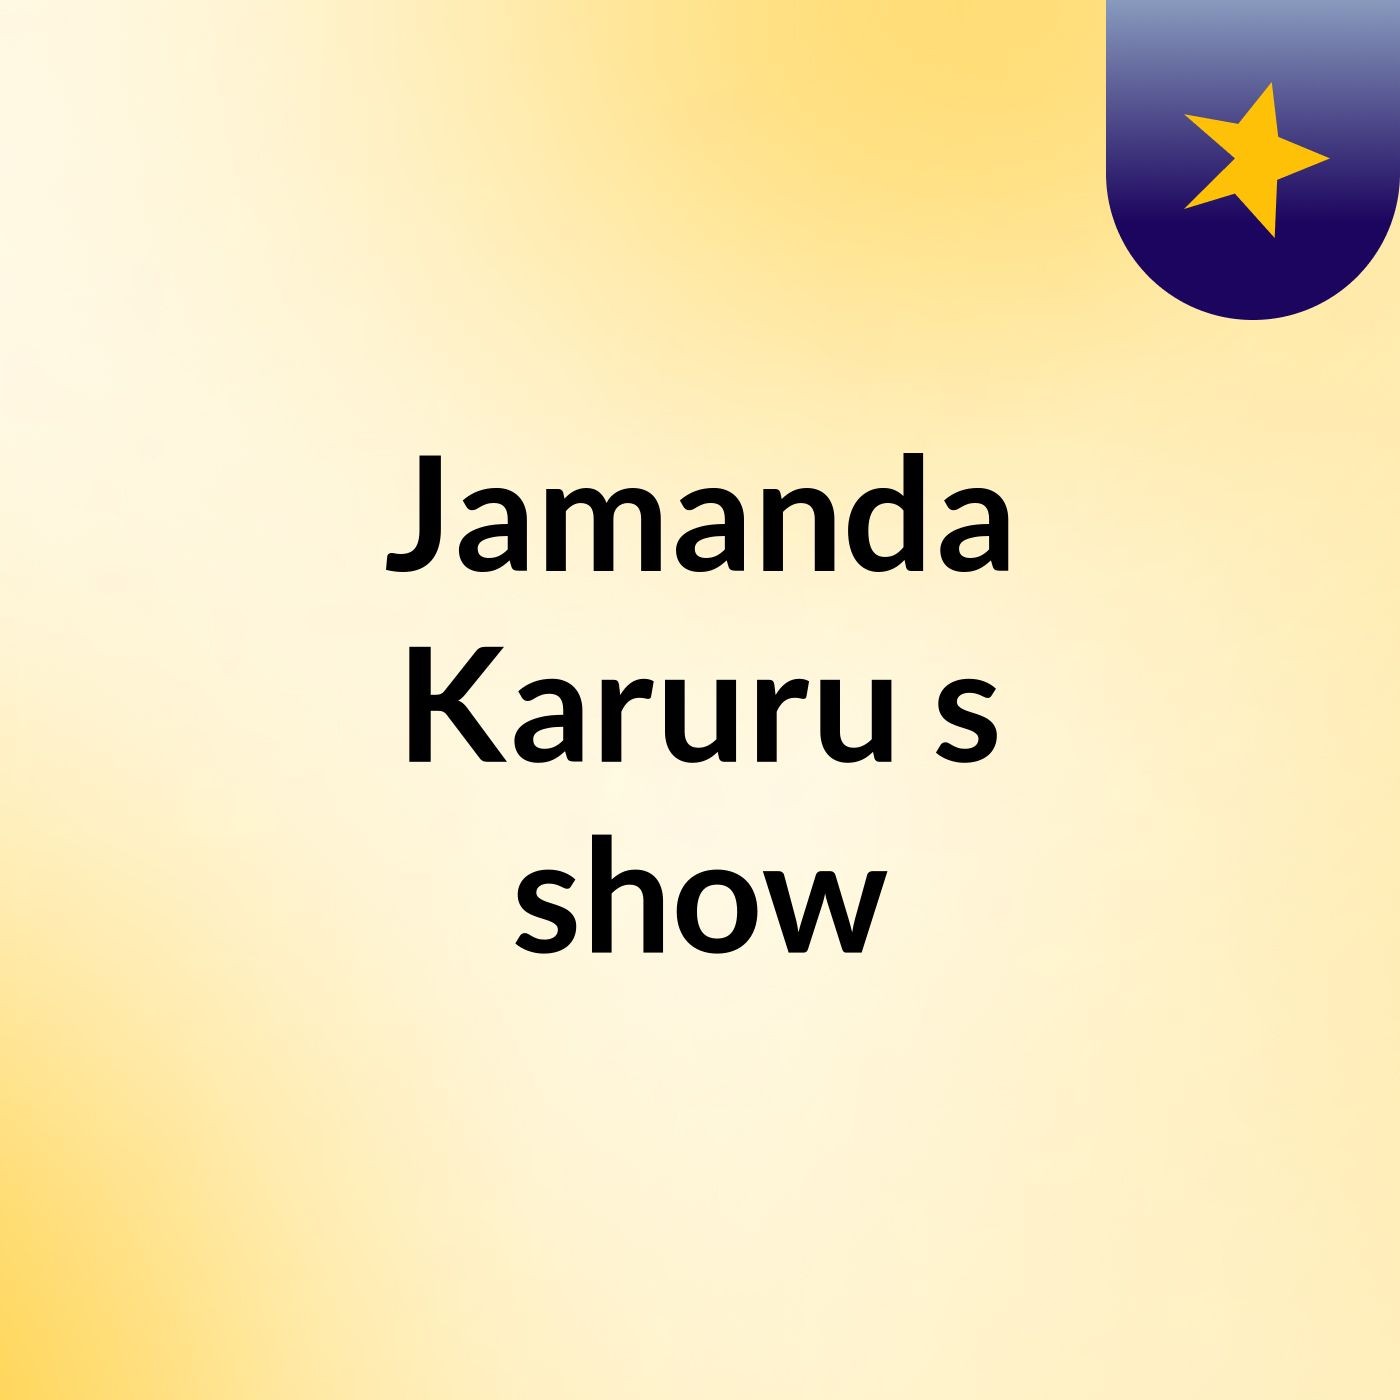 Jamanda Karuru's show